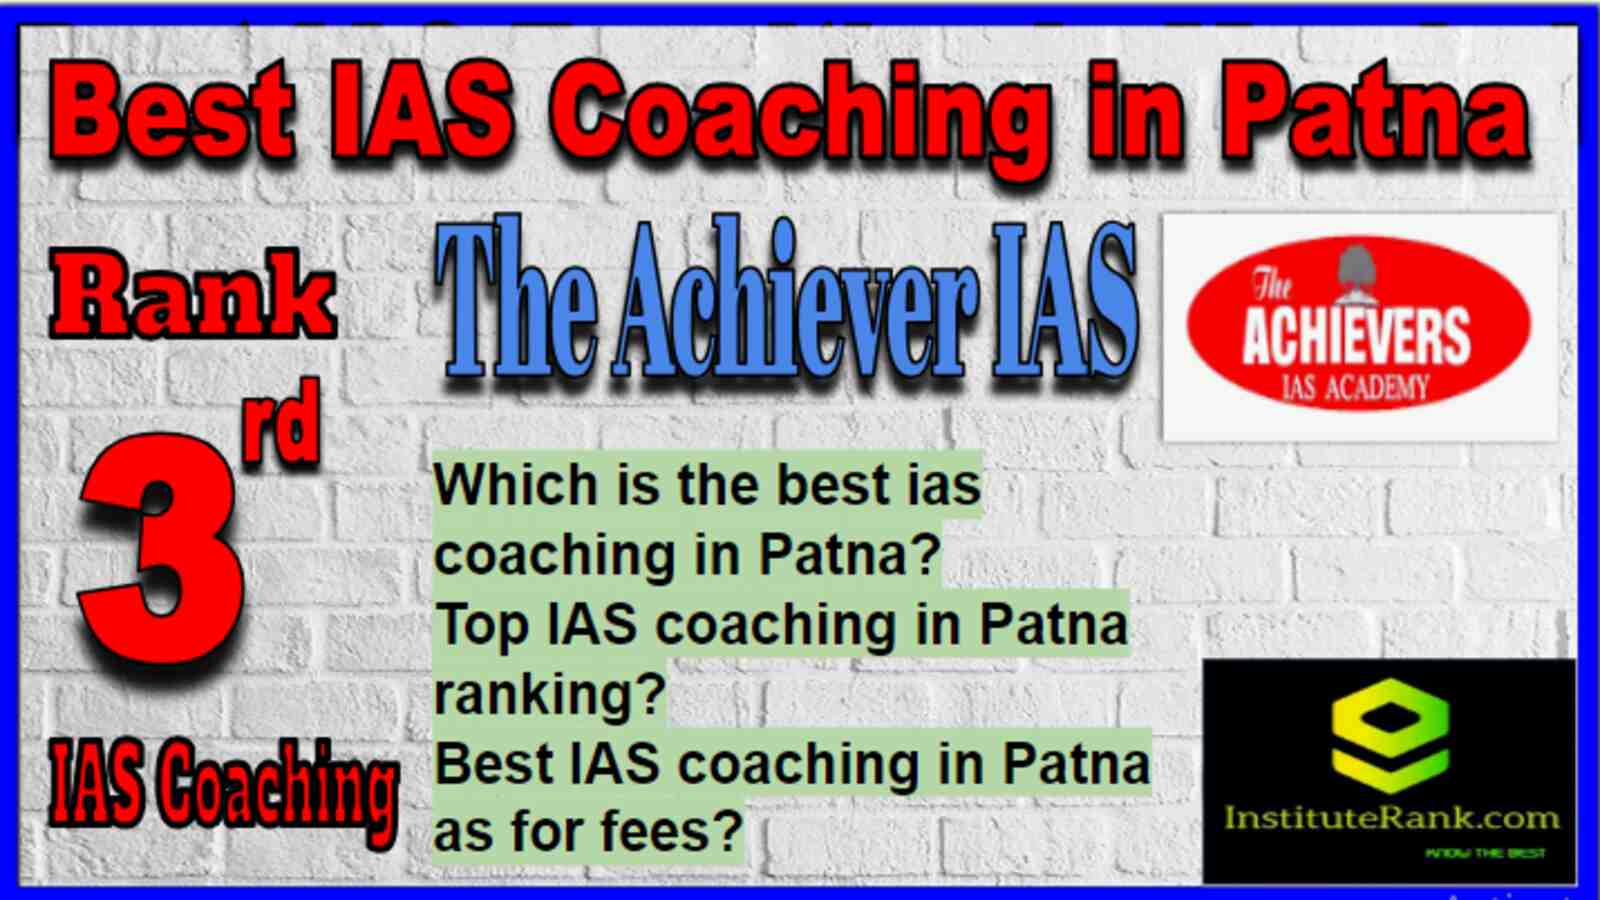 Rank 3 Best IAS Coaching in Patna